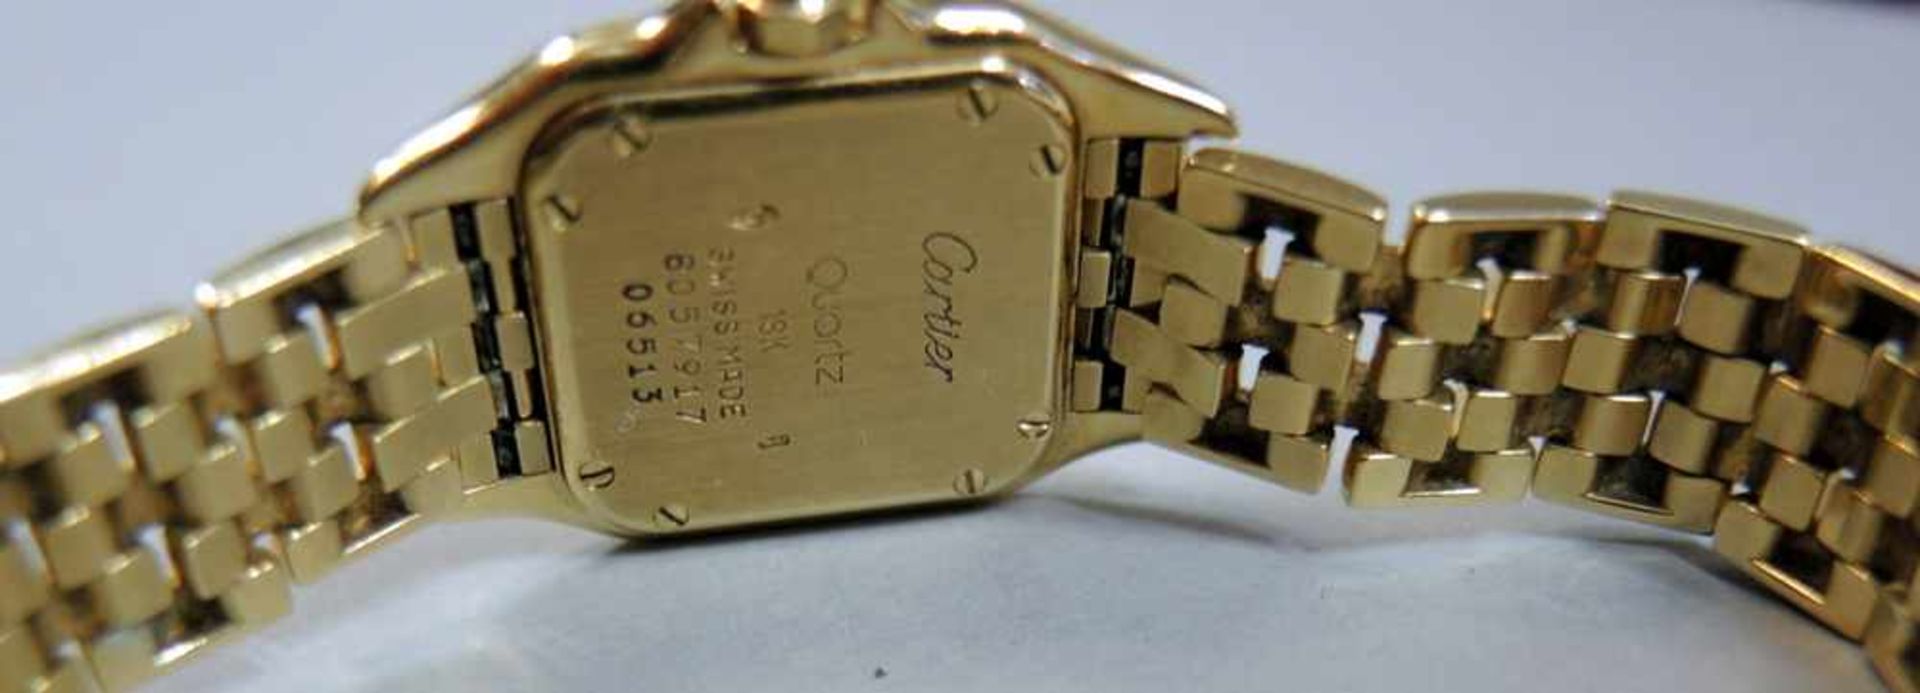 Cartier Armbanduhr Damen, Panthere in 18 K. Gold, Quarz. Mit Box, voll gangbar. 90er Jahre. - Bild 3 aus 3